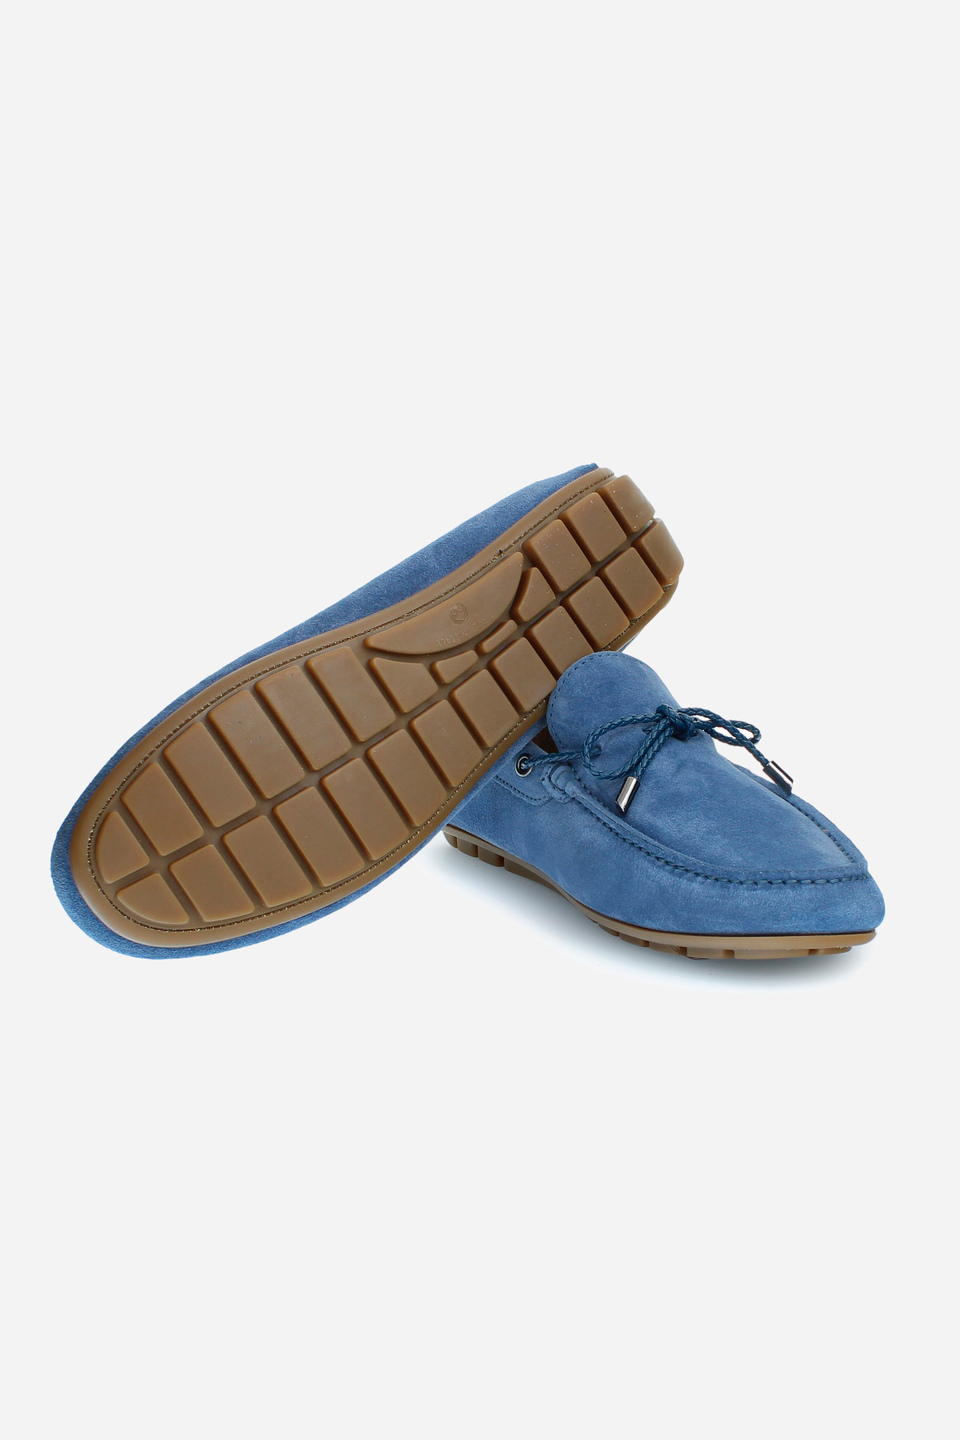 Men's suede loafers with laces | La Martina - Official Online Shop